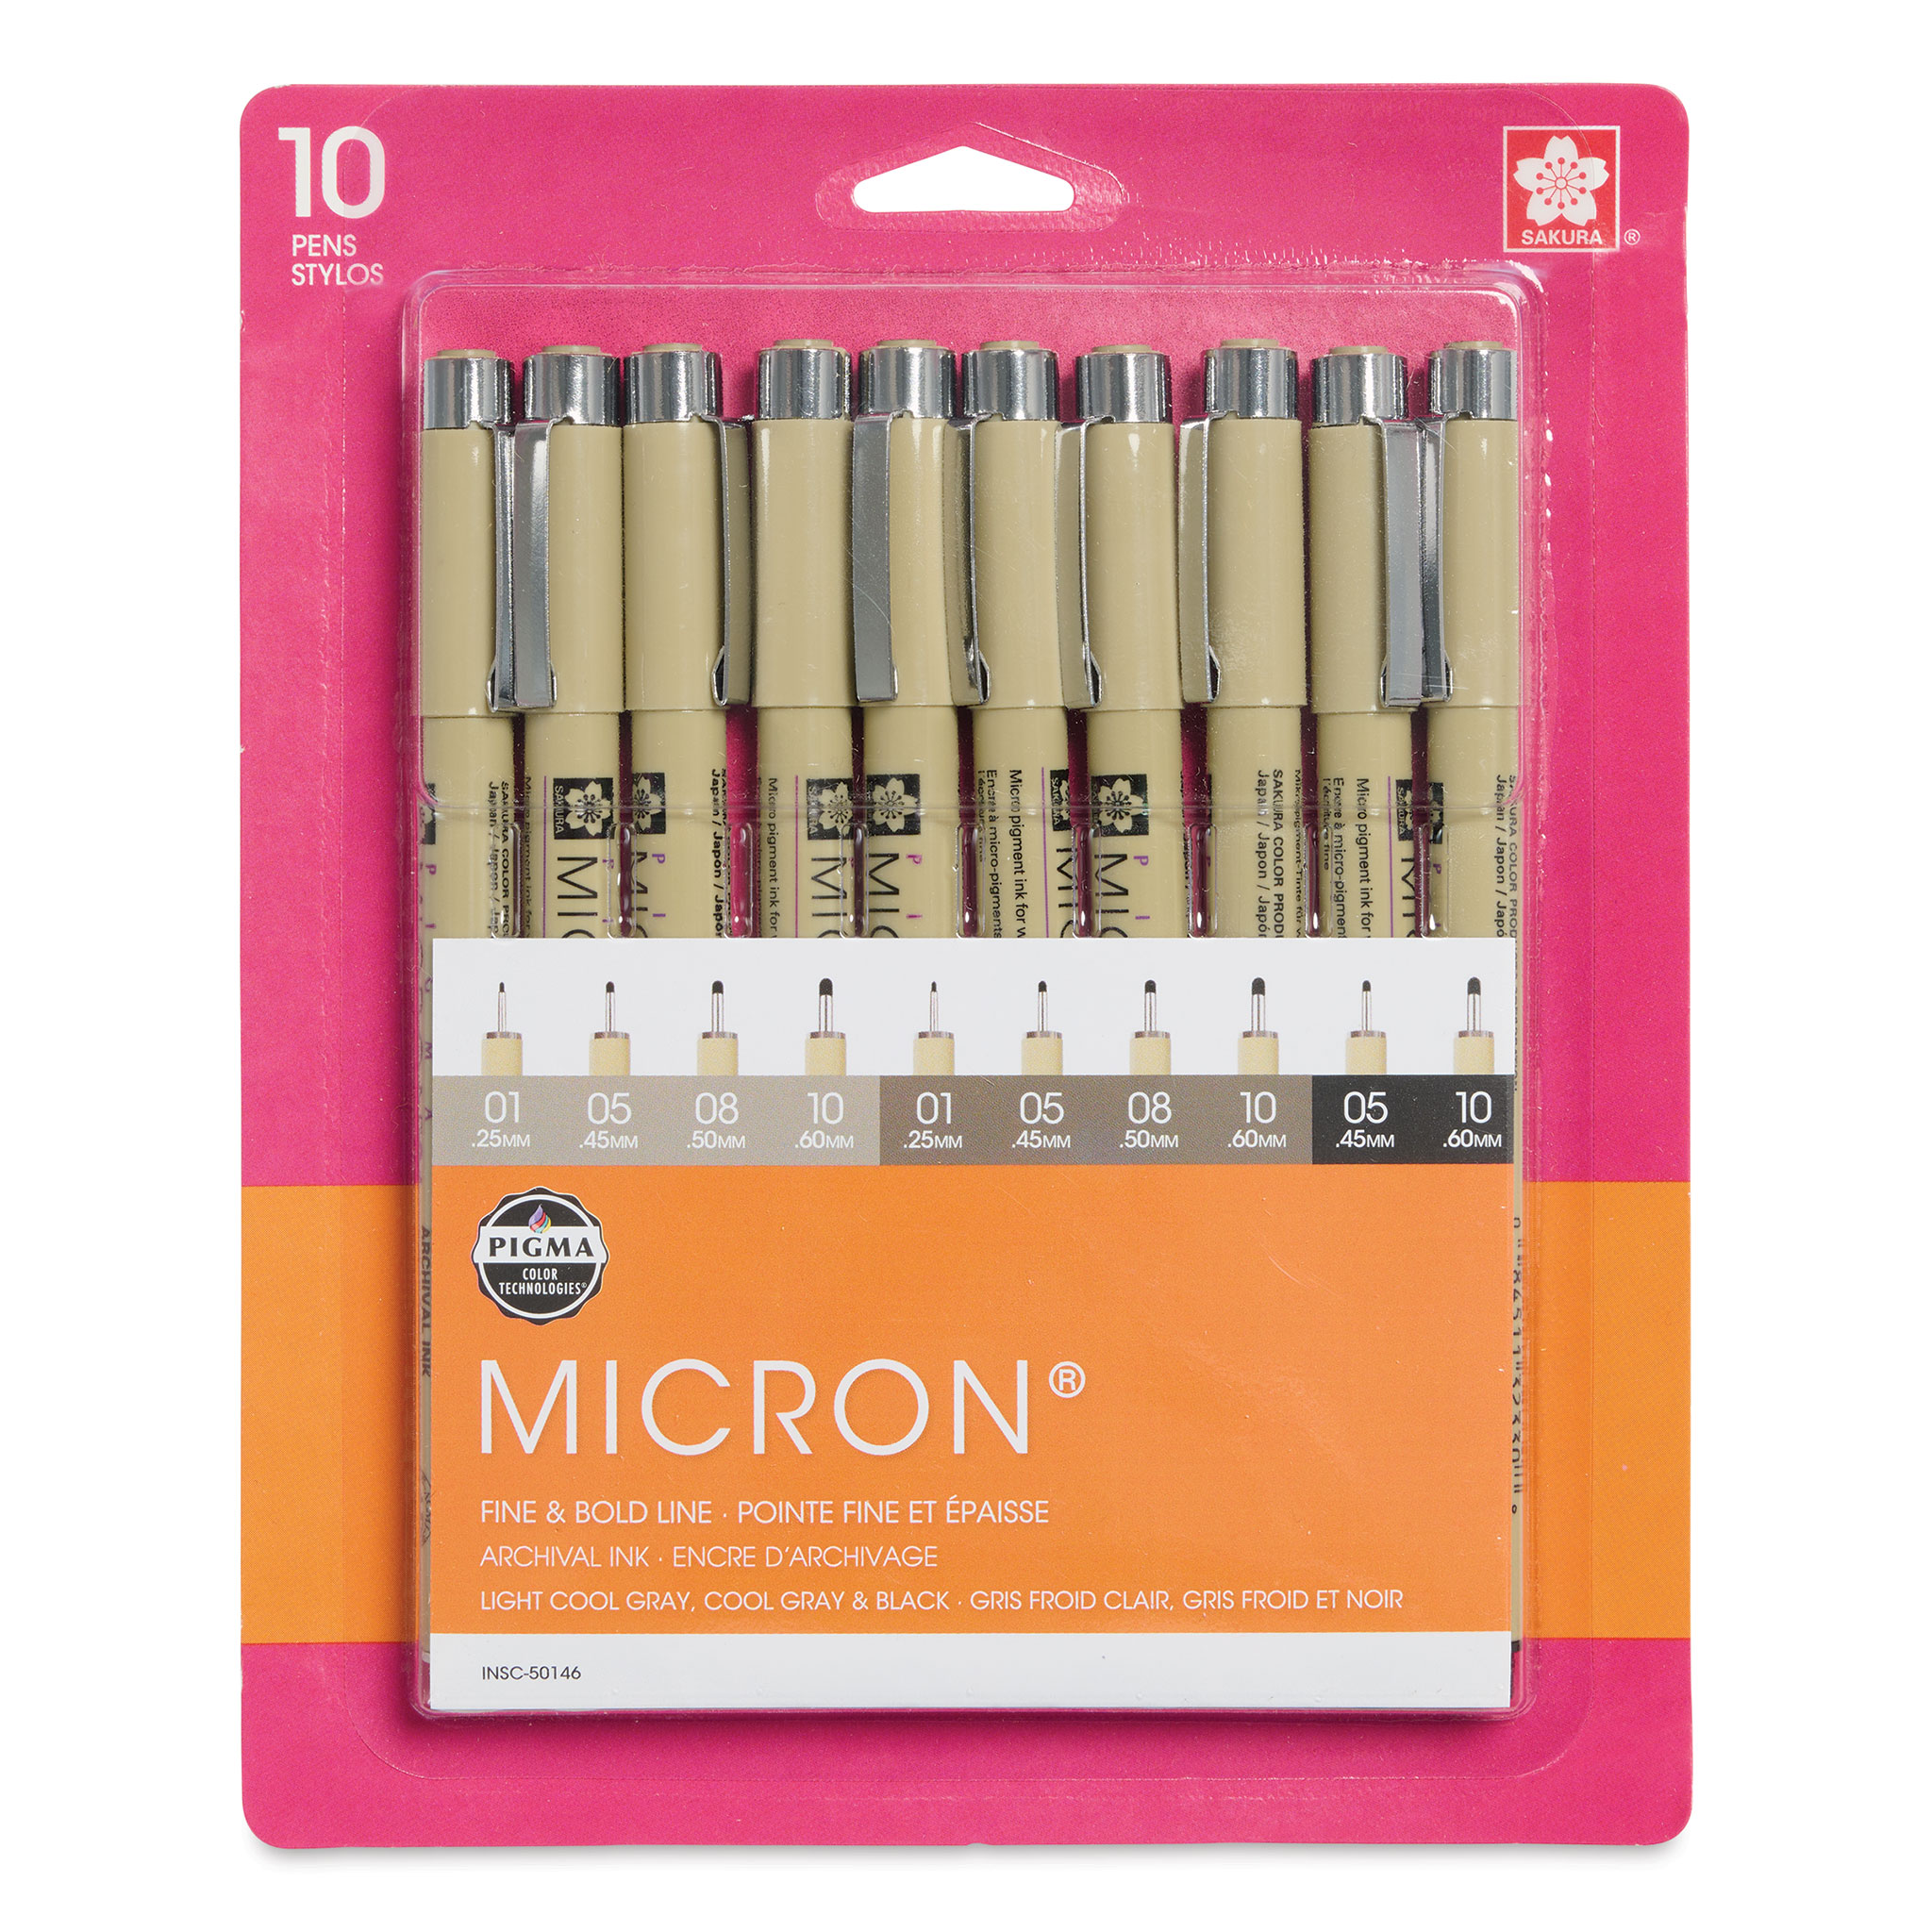 Sakura Pigma Micron Pens - Set of 10, Grays and Black